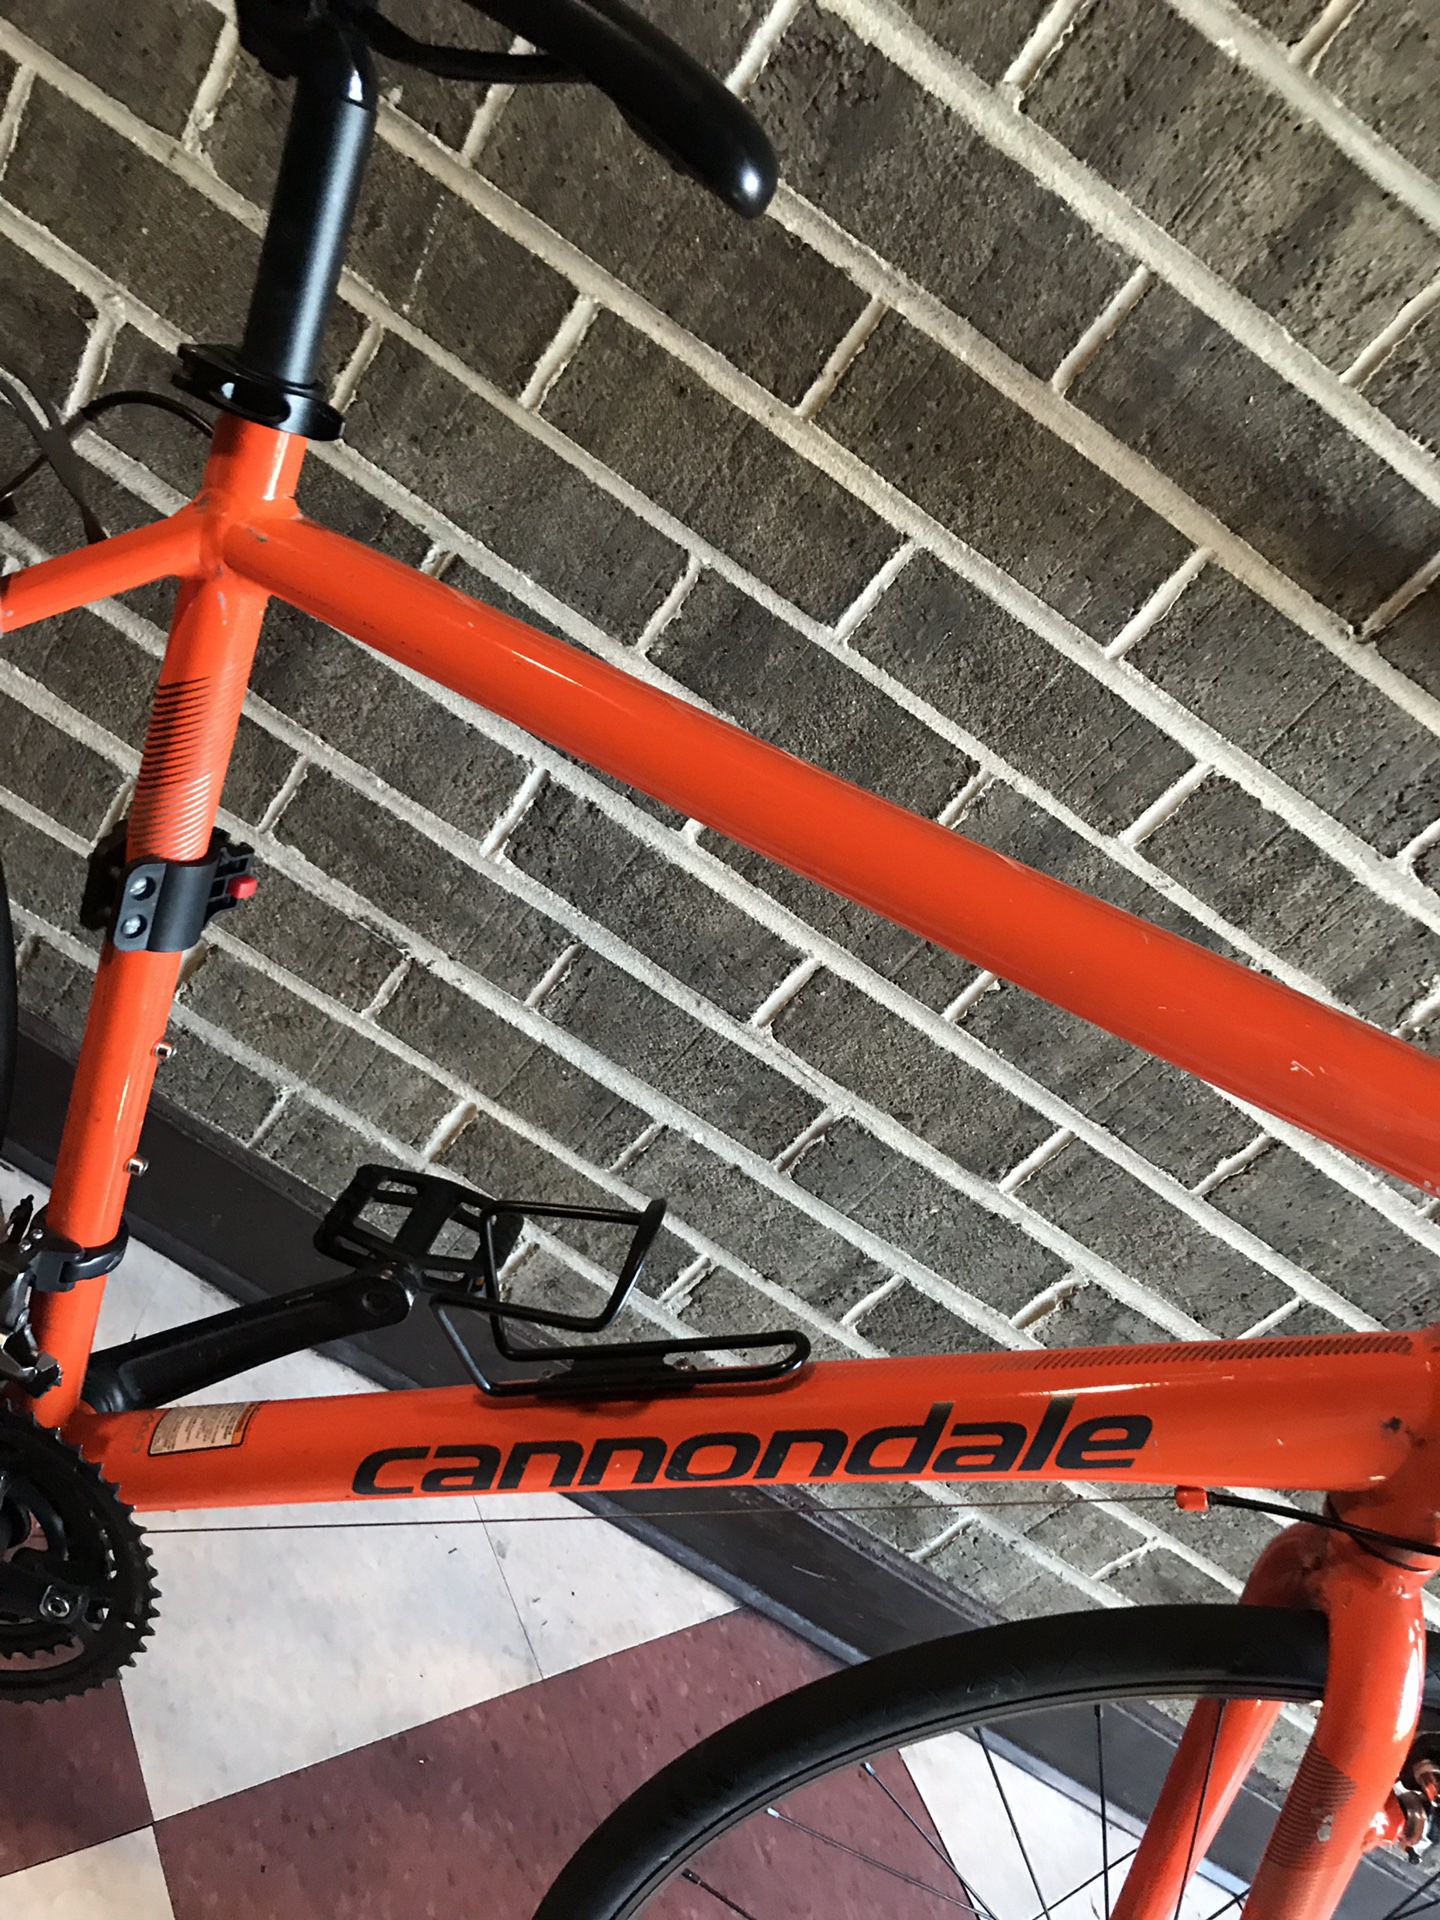 Cannondale bike